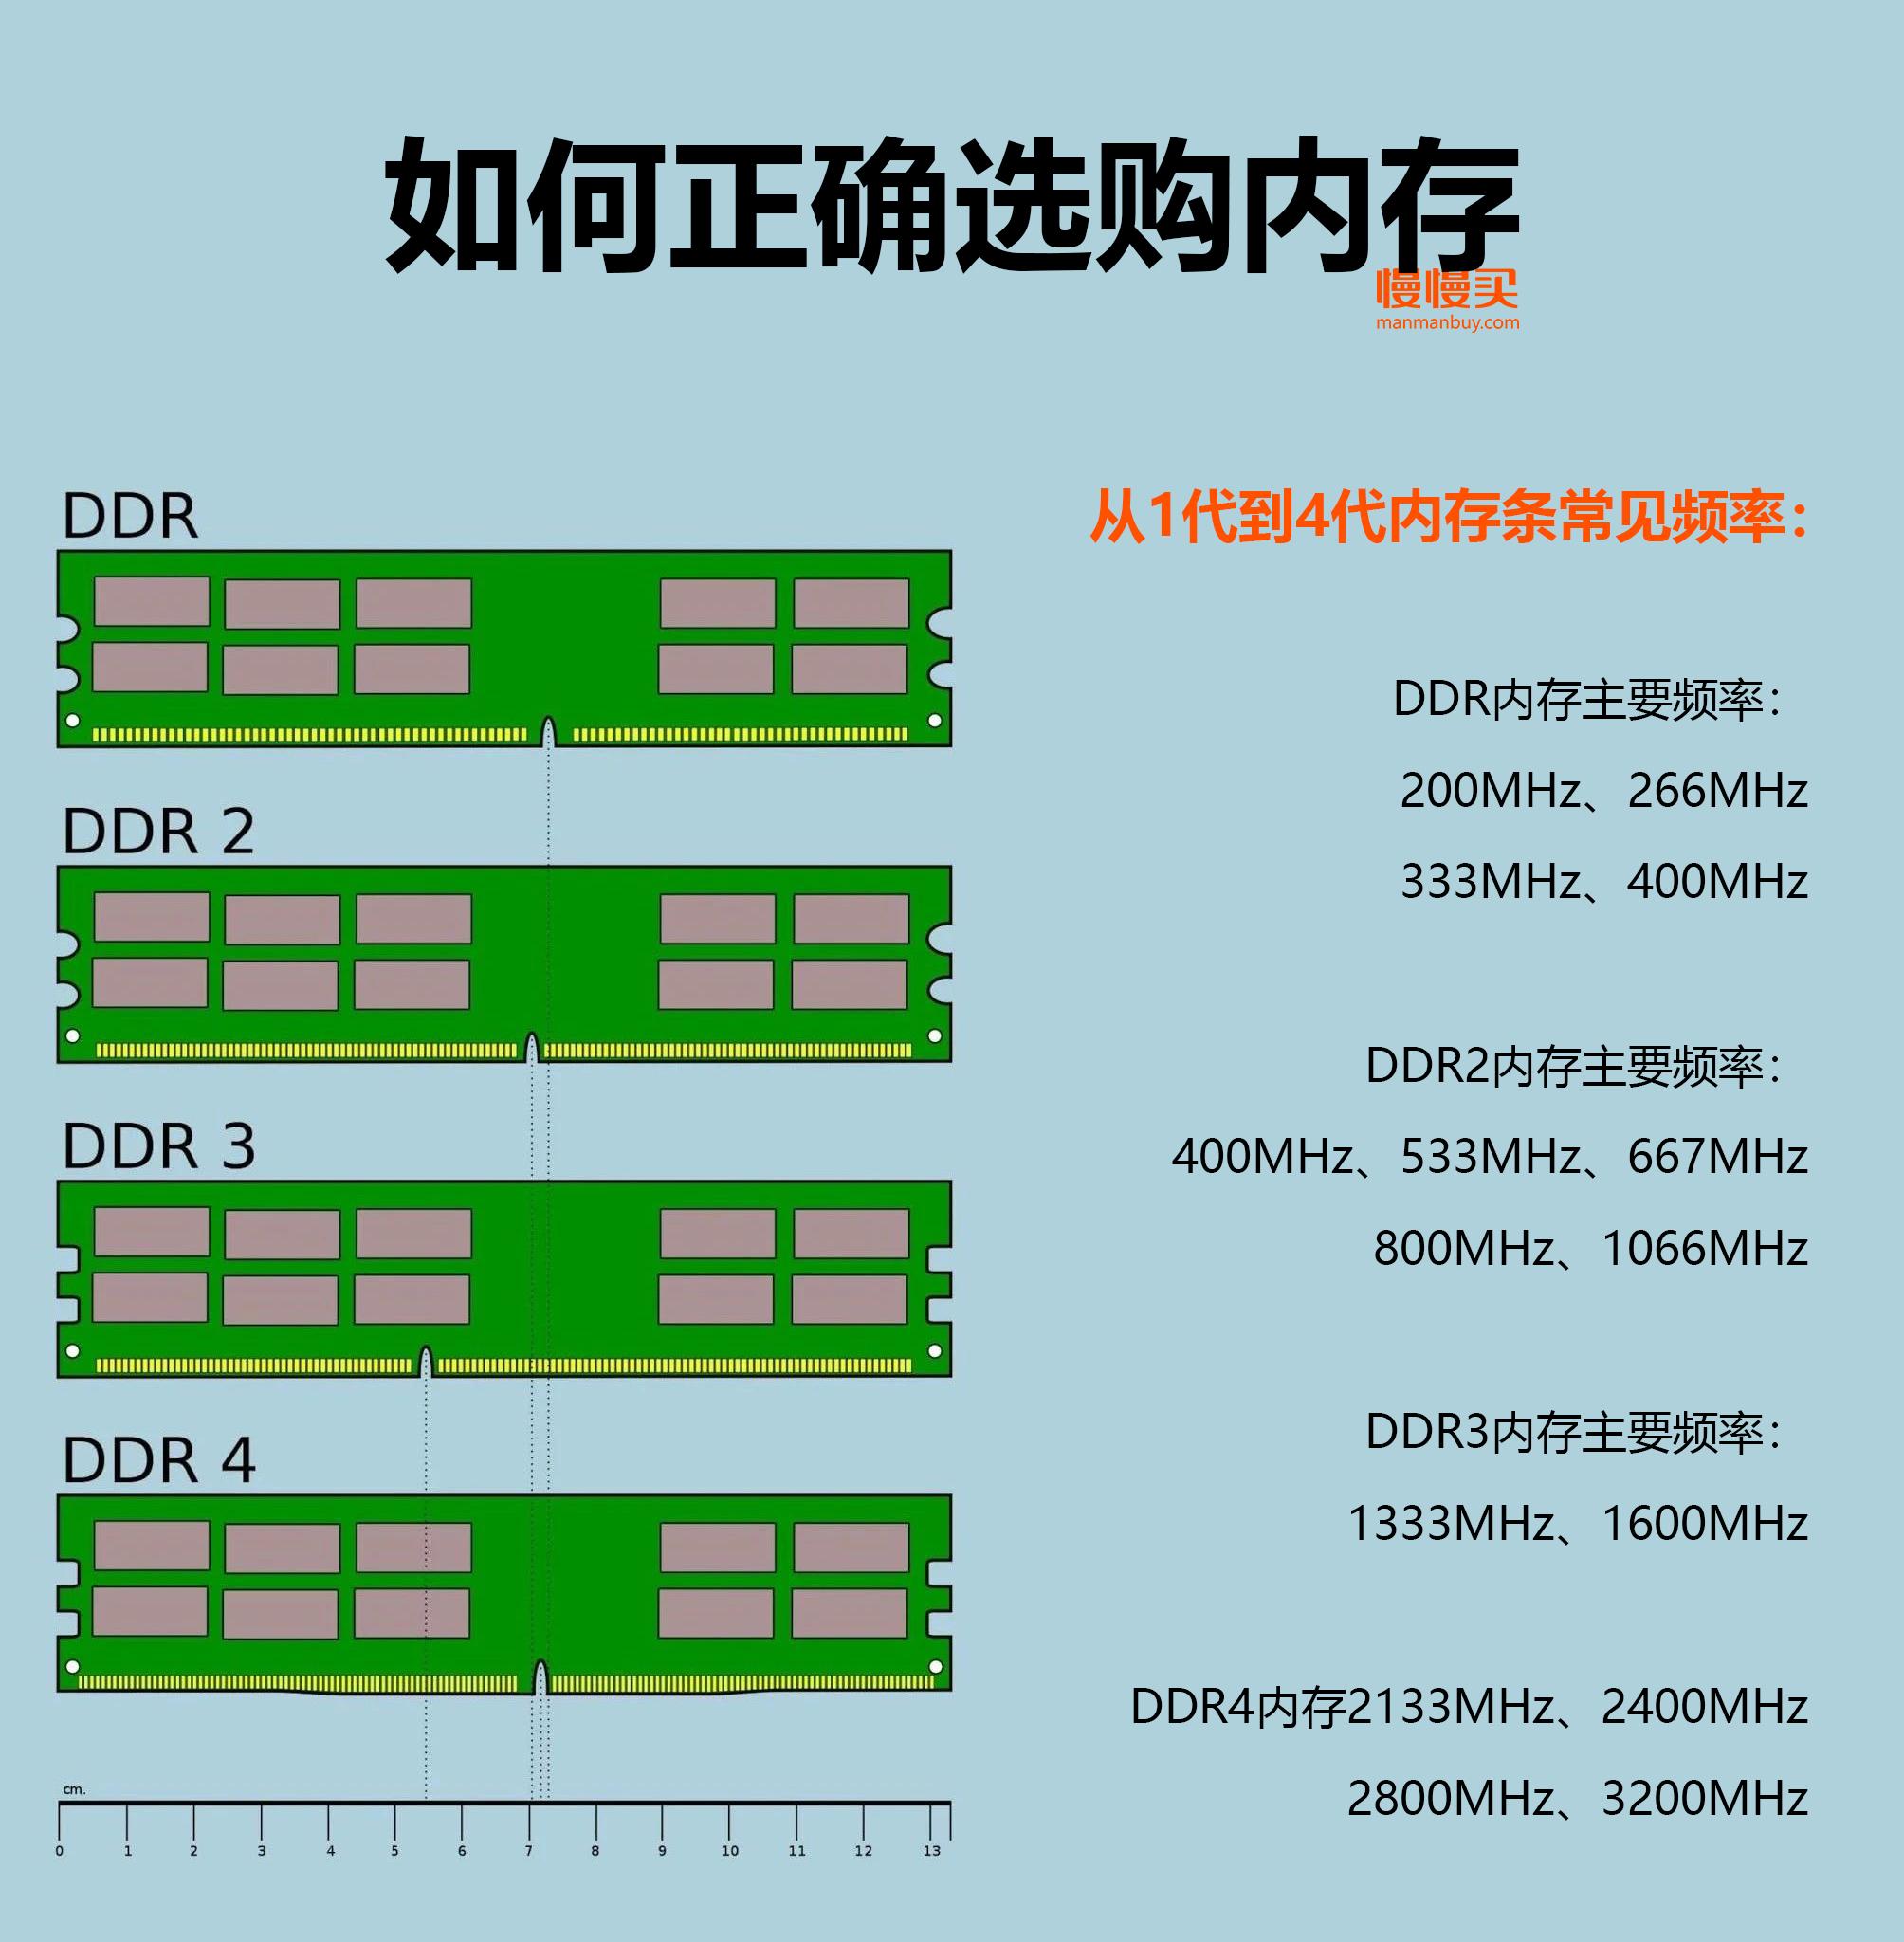 ddr2为什么是2100 深入探究 DDR2 内存 2100 系列，揭示其为电脑运行注入动力的奥秘